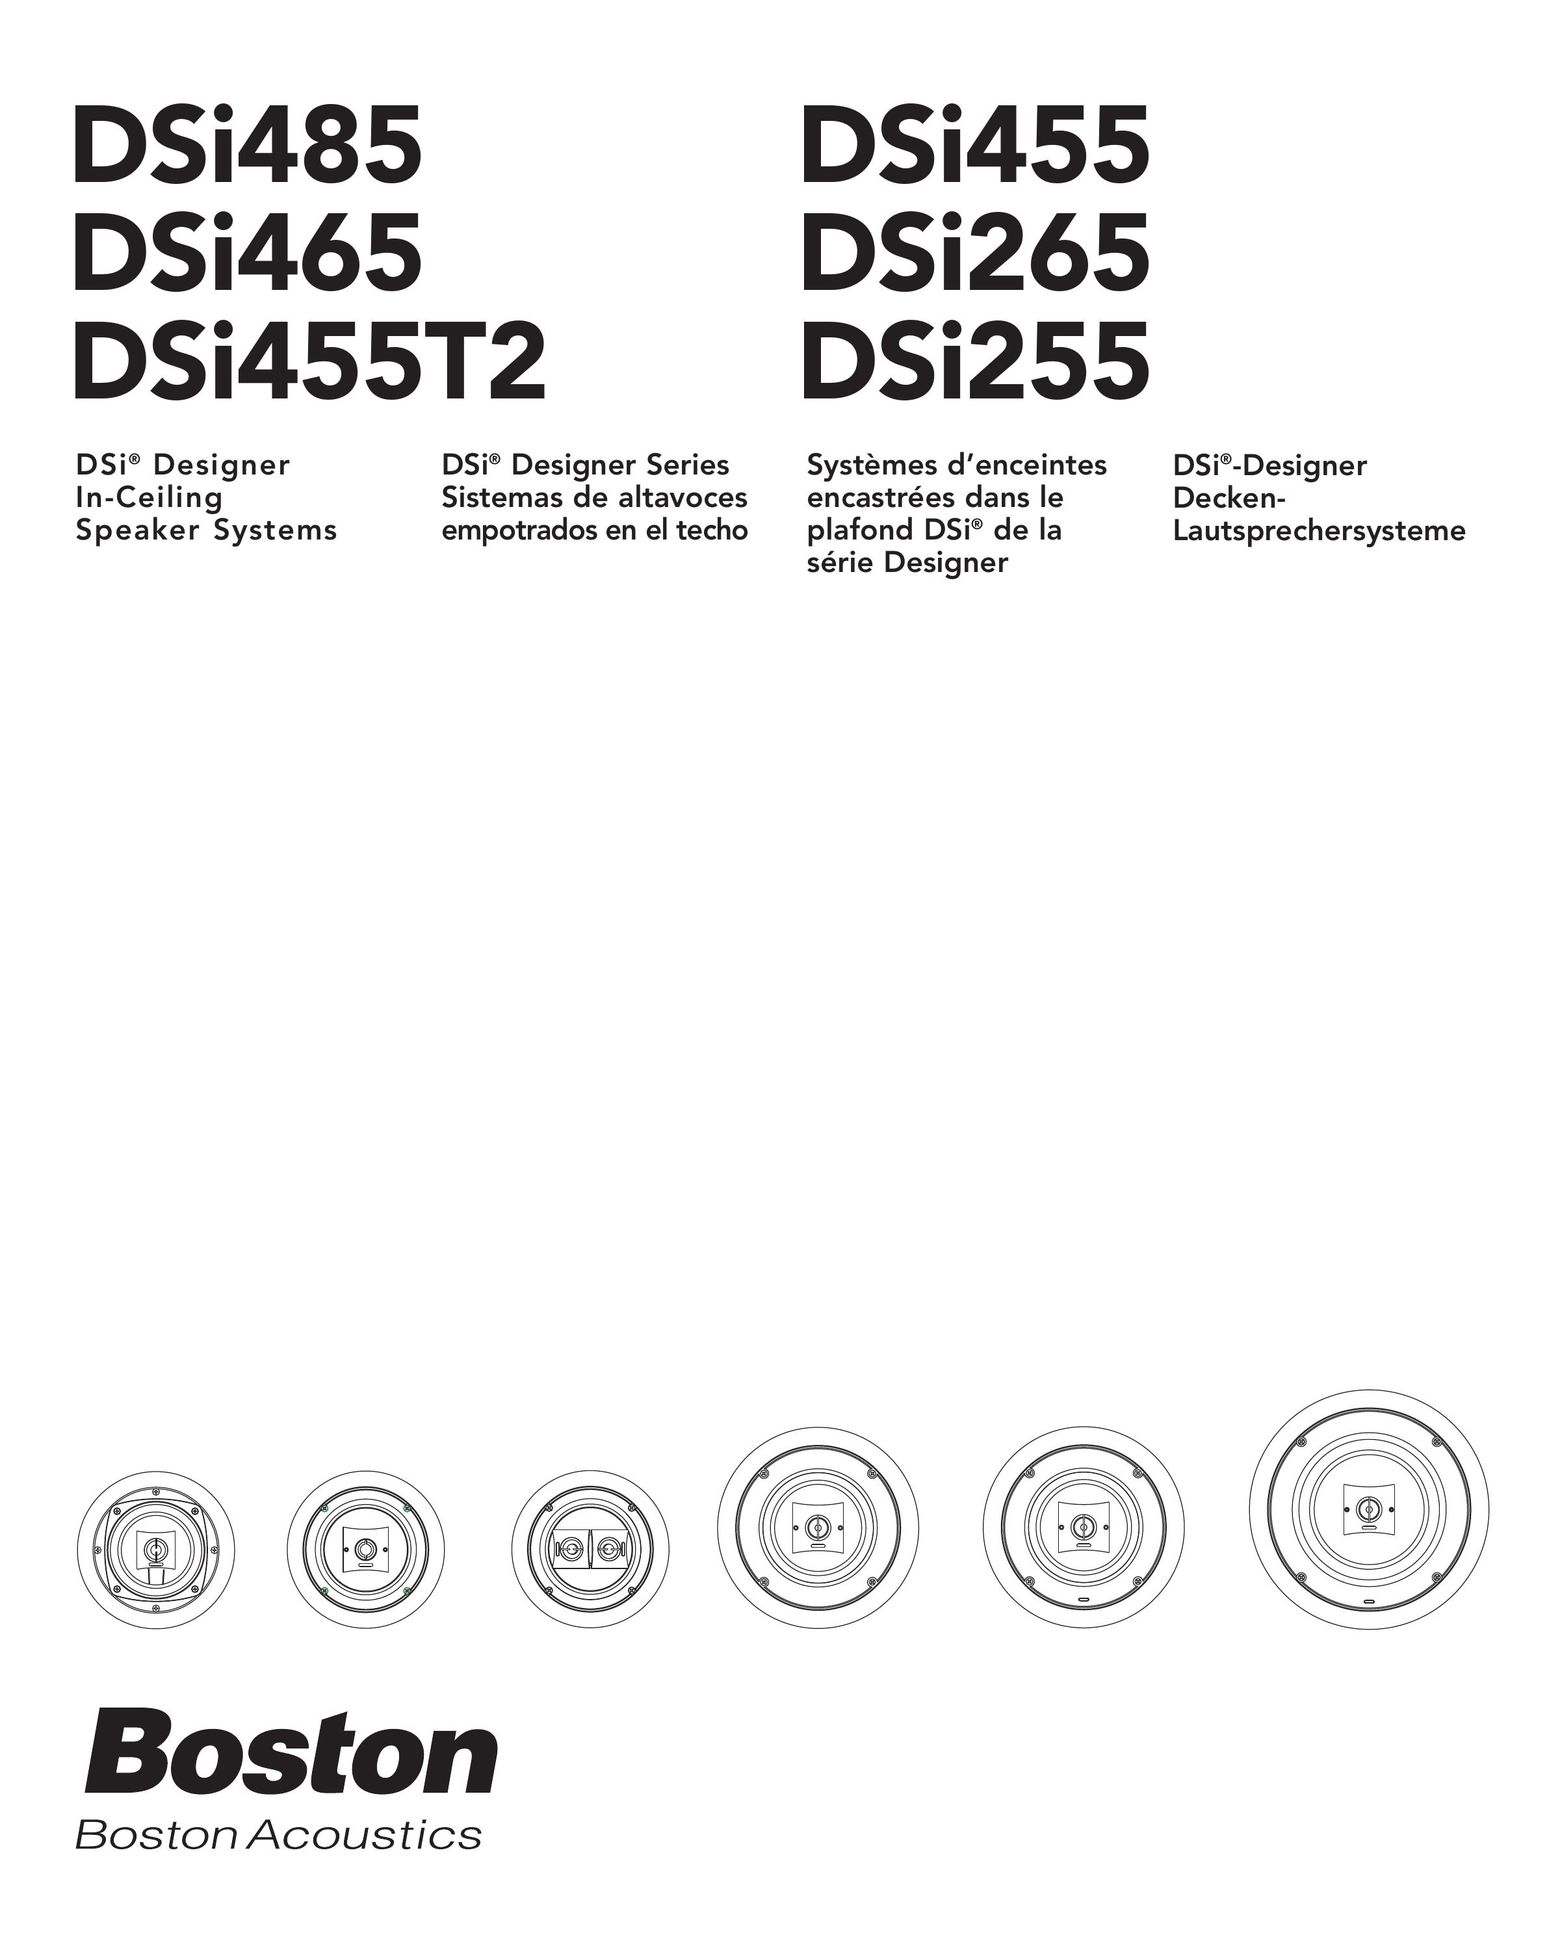 Boston Acoustics DSI465 Computer Drive User Manual